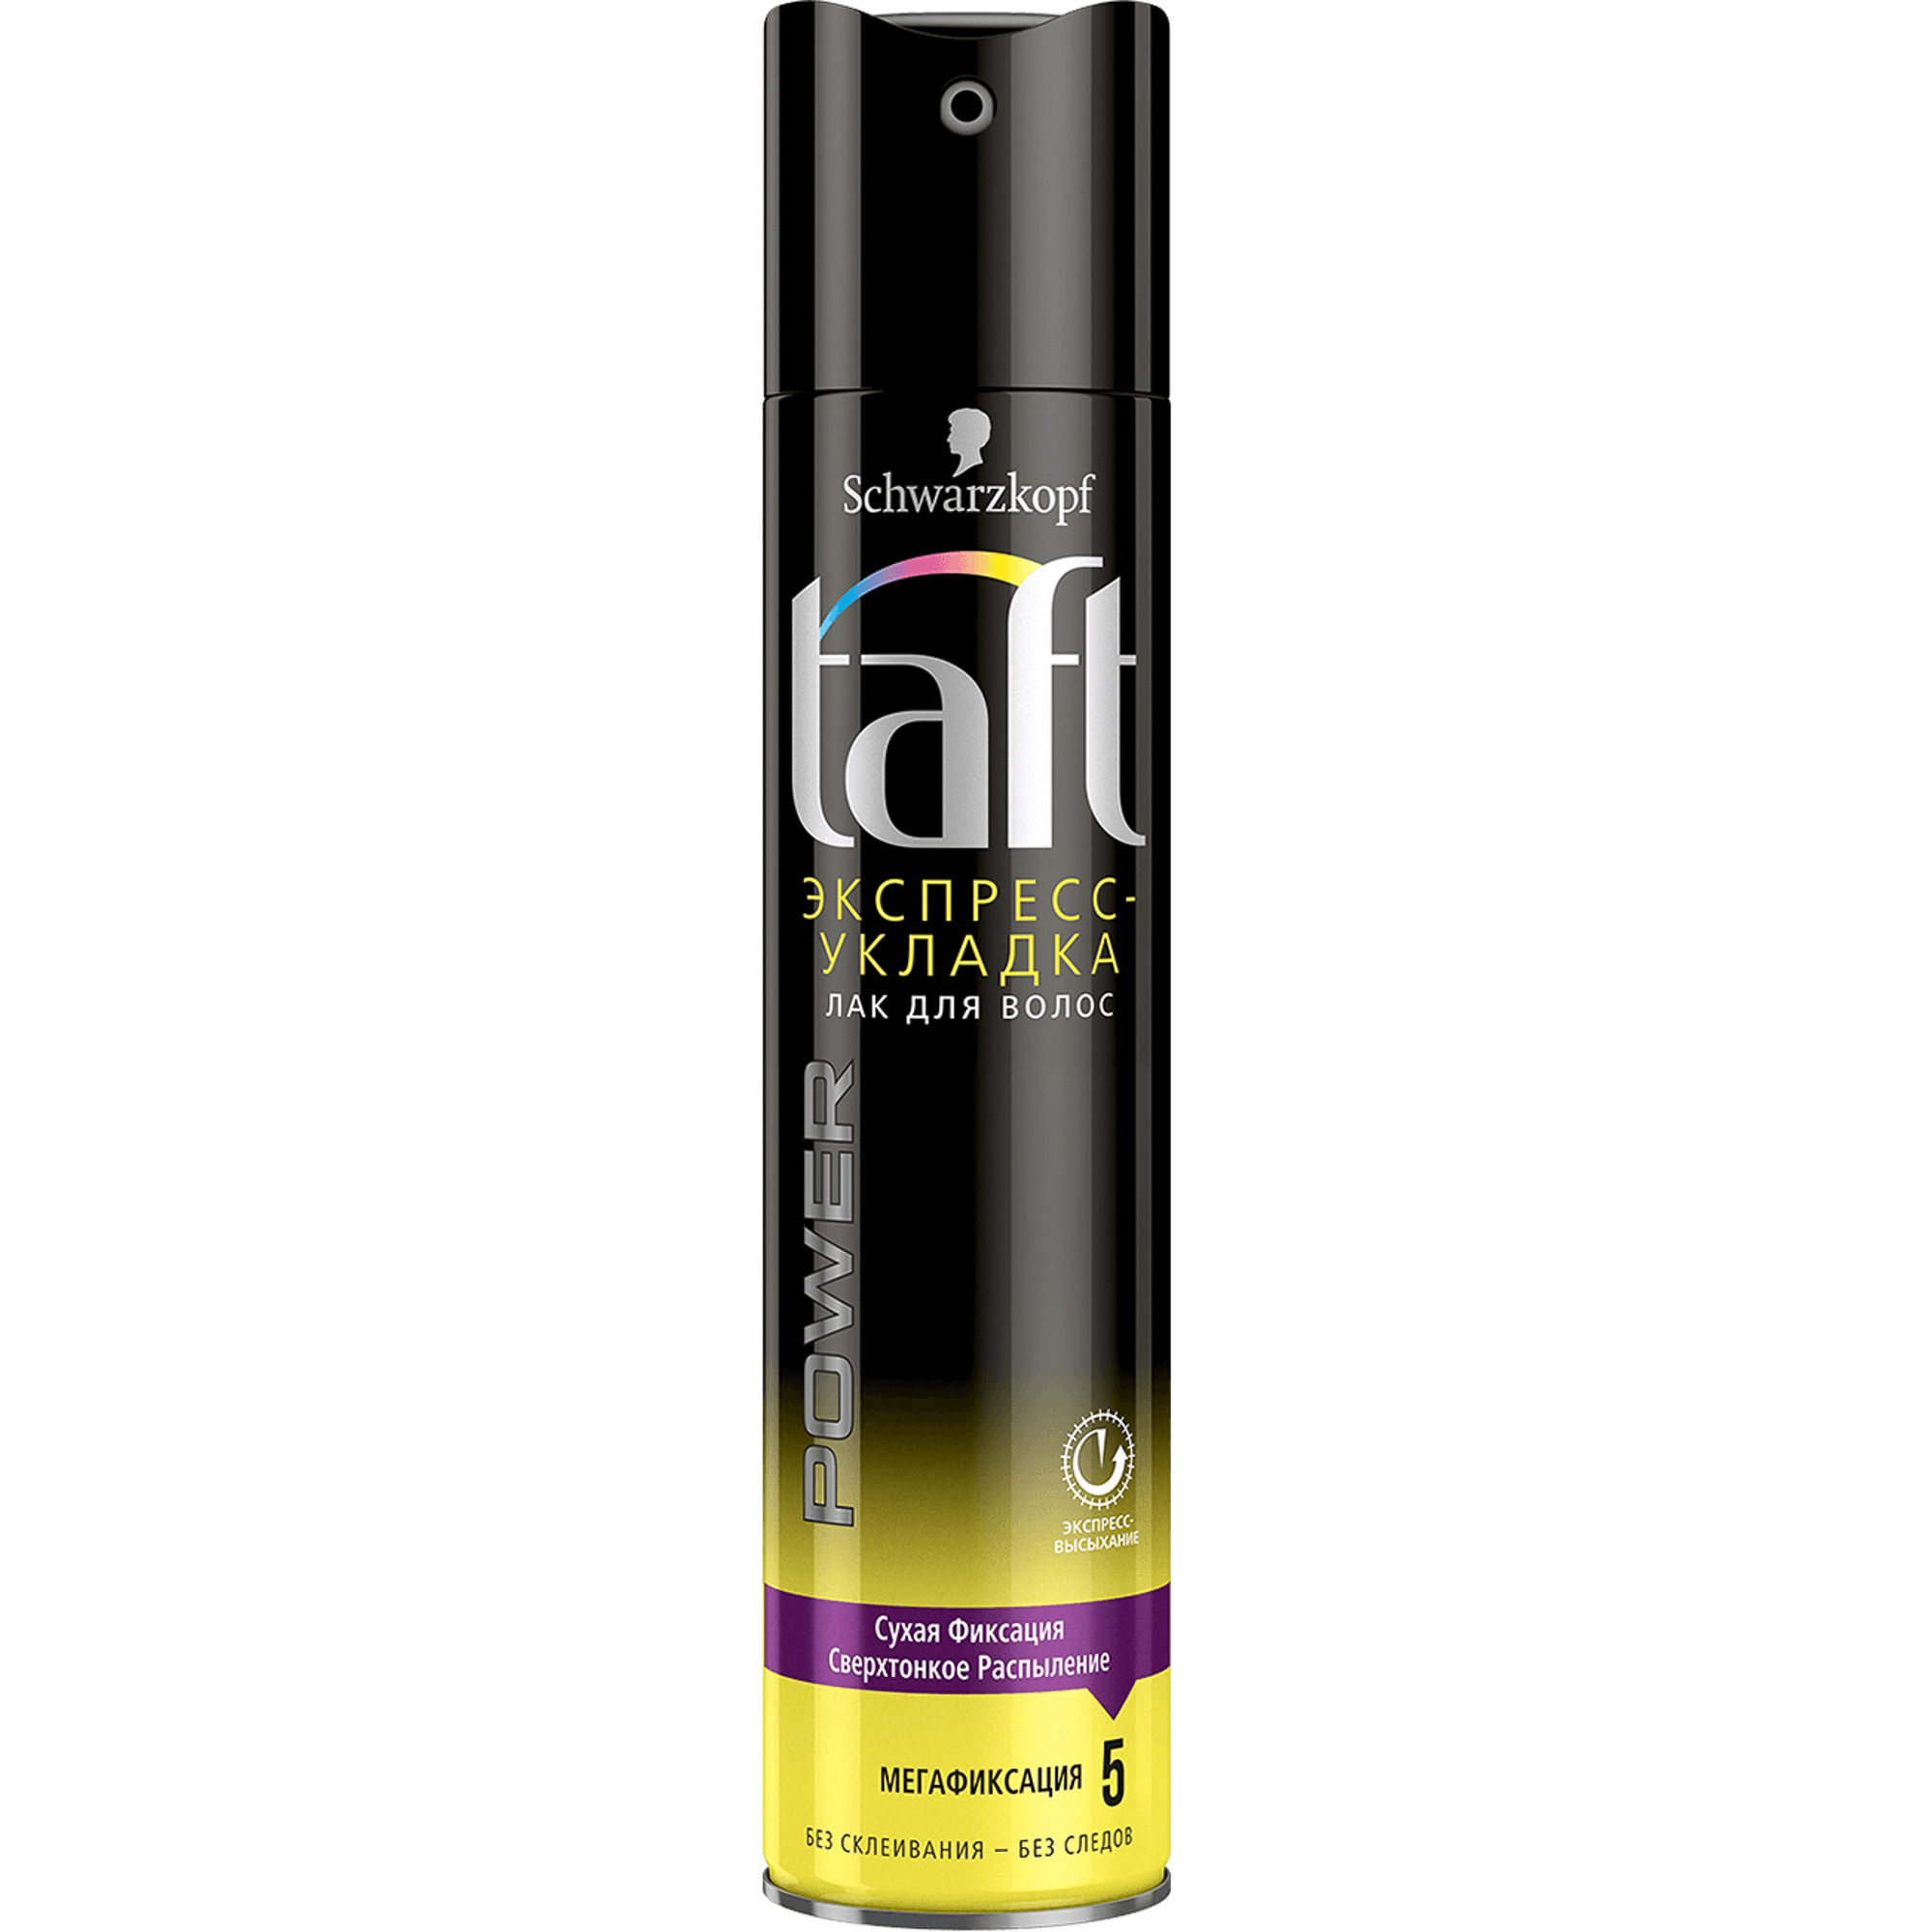 Желтый лак для волос. Taft Power лак 225мл мегафиксация. Schwarzkopf Taft 3 лак для волос 225 мл. Лак для волос Taft Power мегафиксация экспресс-укладка 225мл. Лак для волос Schwarzkopf Taft Power.